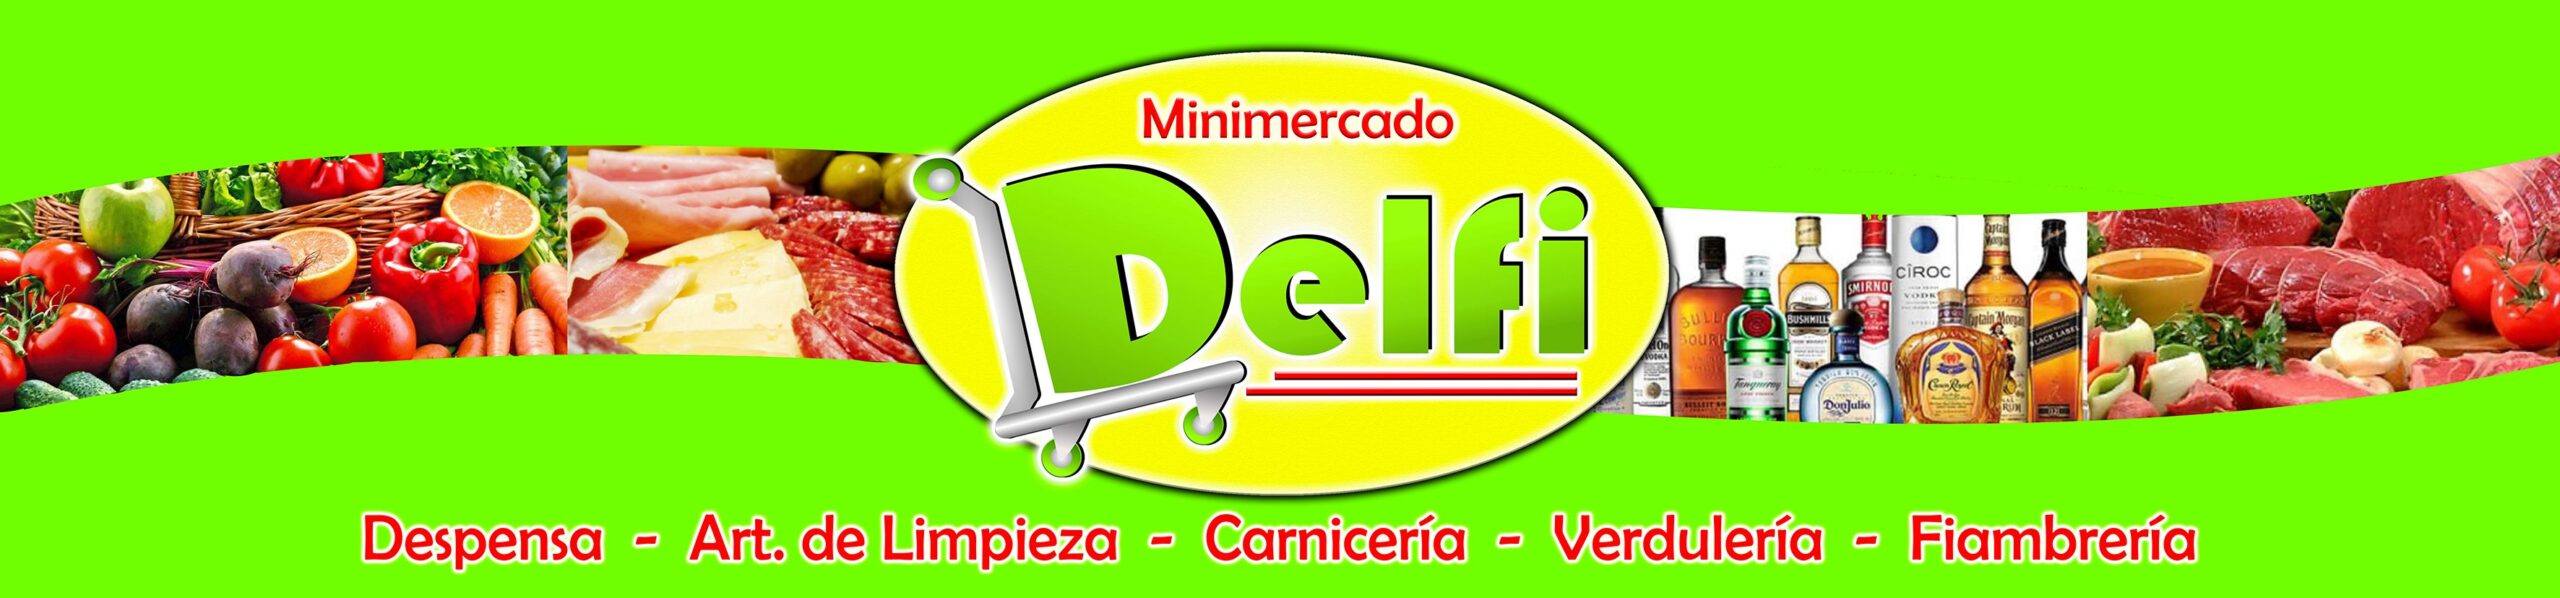 Minimercado Delfi